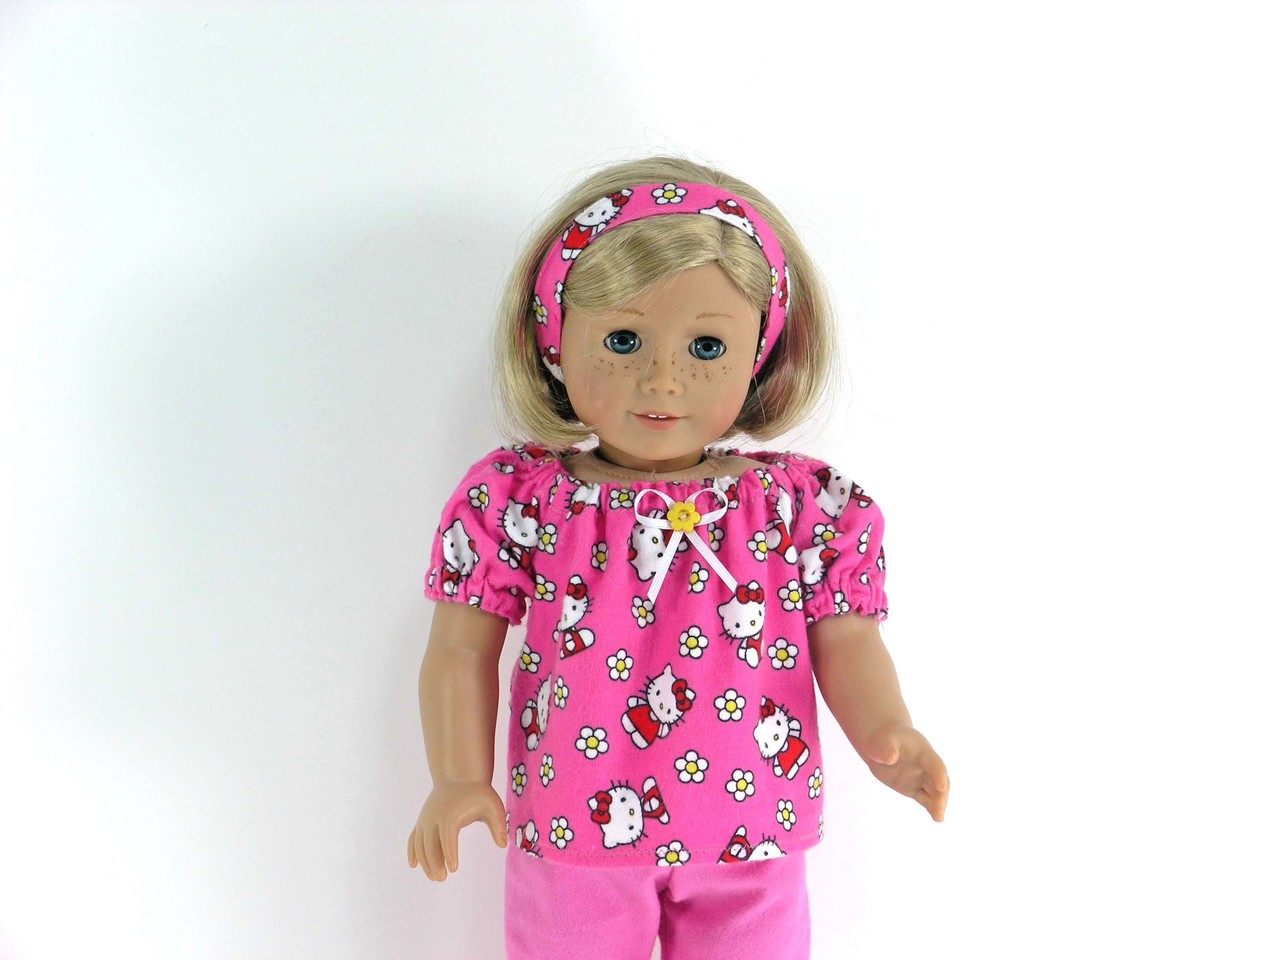 Pajamas Handmade for 18 inch American Girl Doll - Pink Kitty